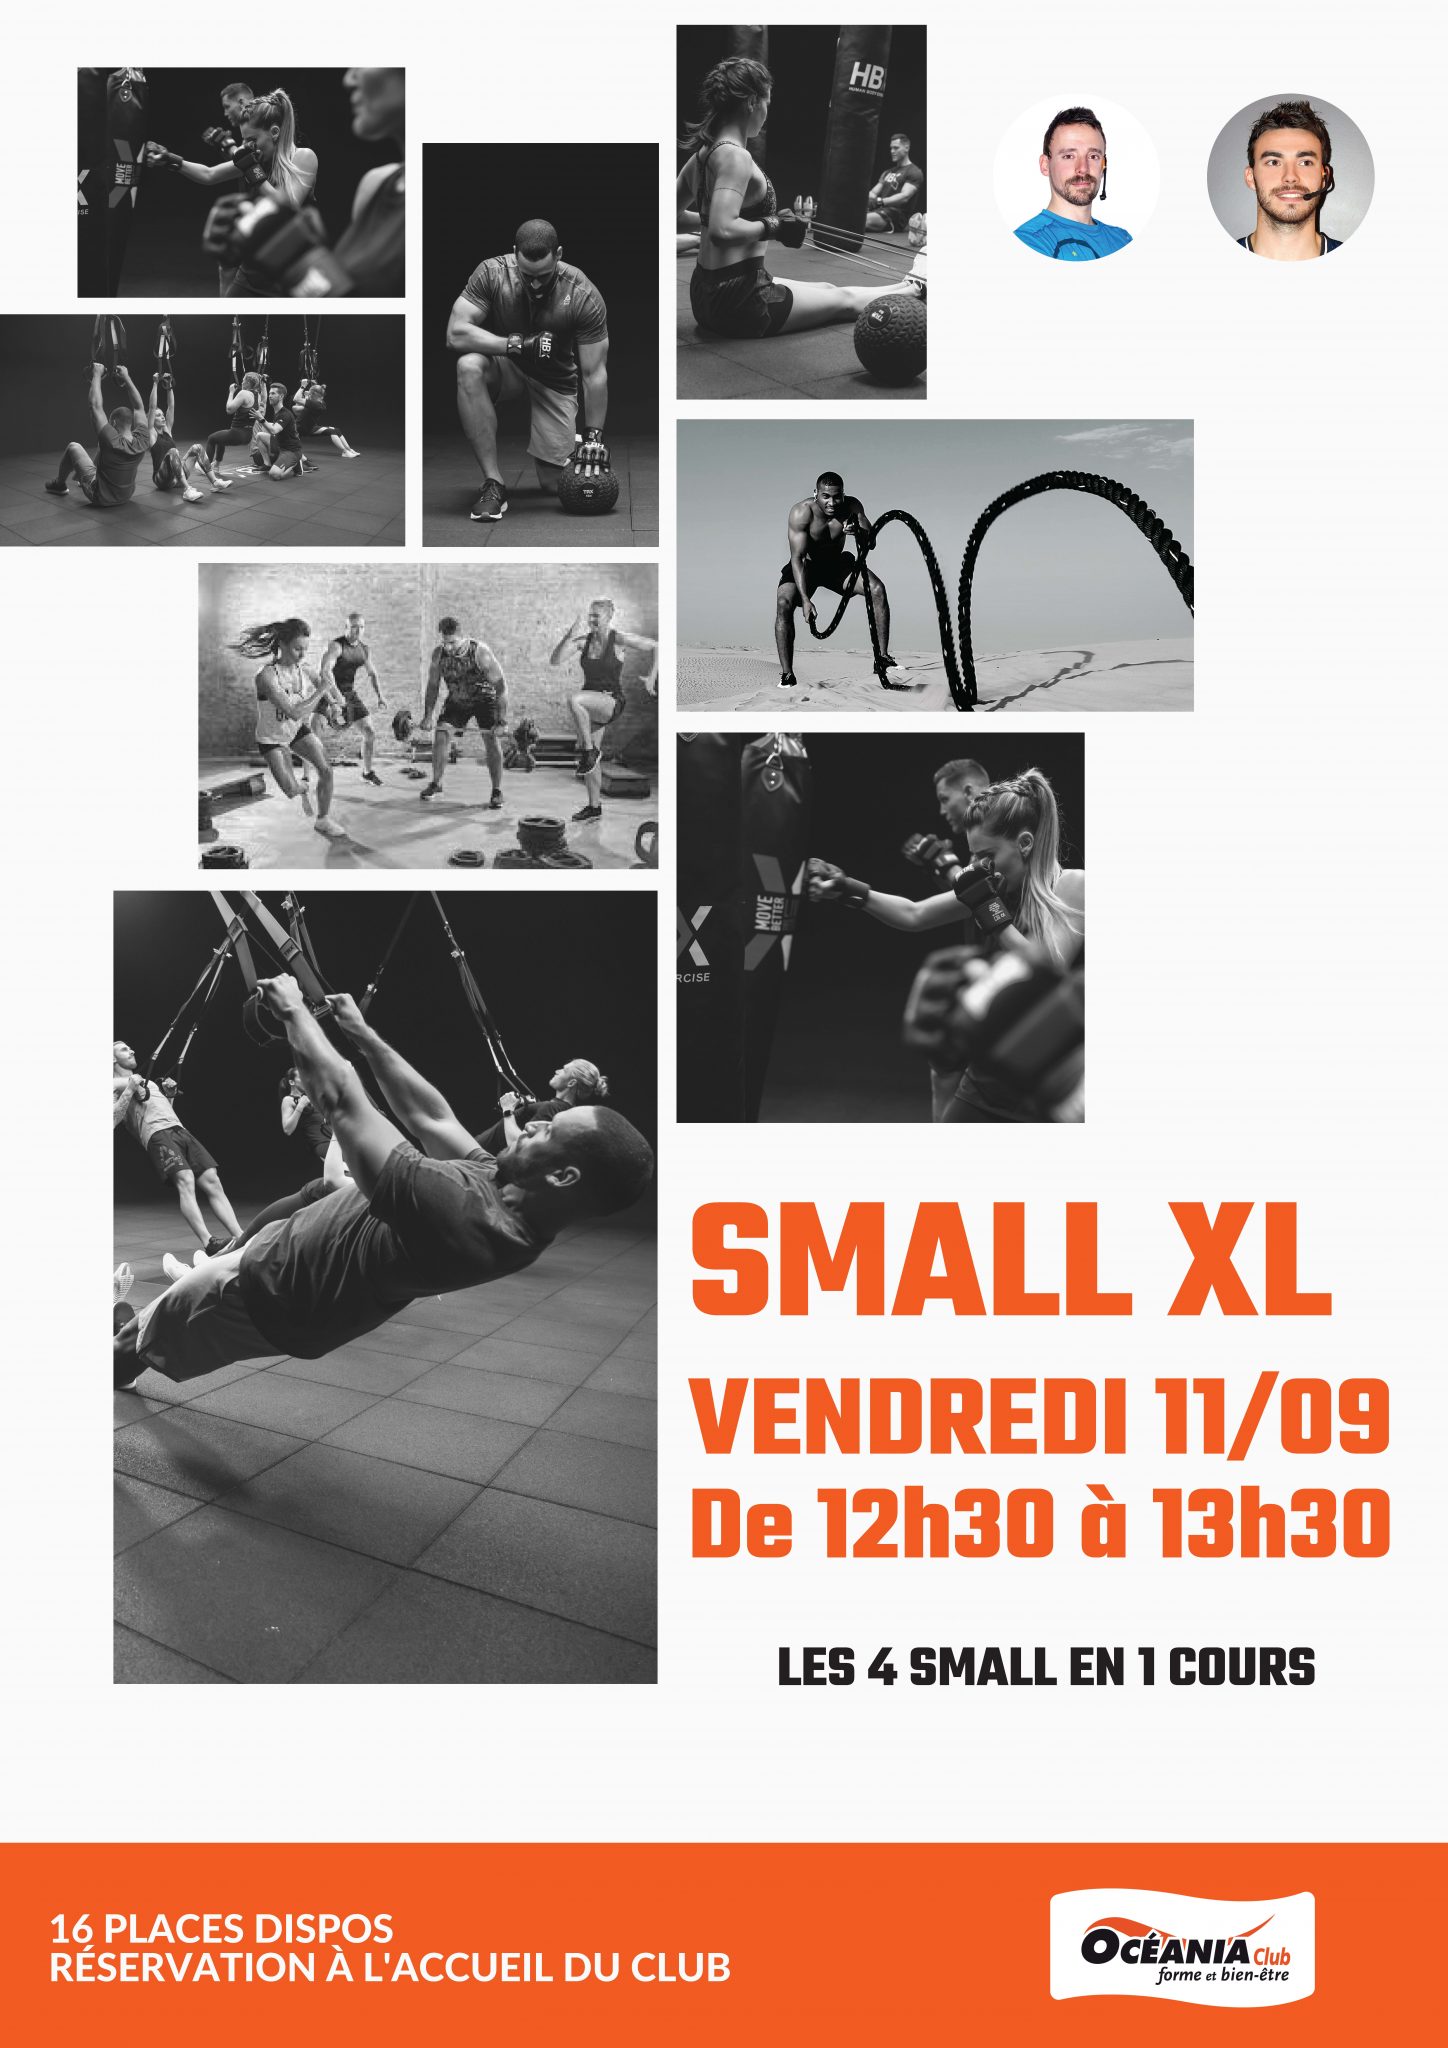 SDF - Small XL - Océania Club Mont de Marsan